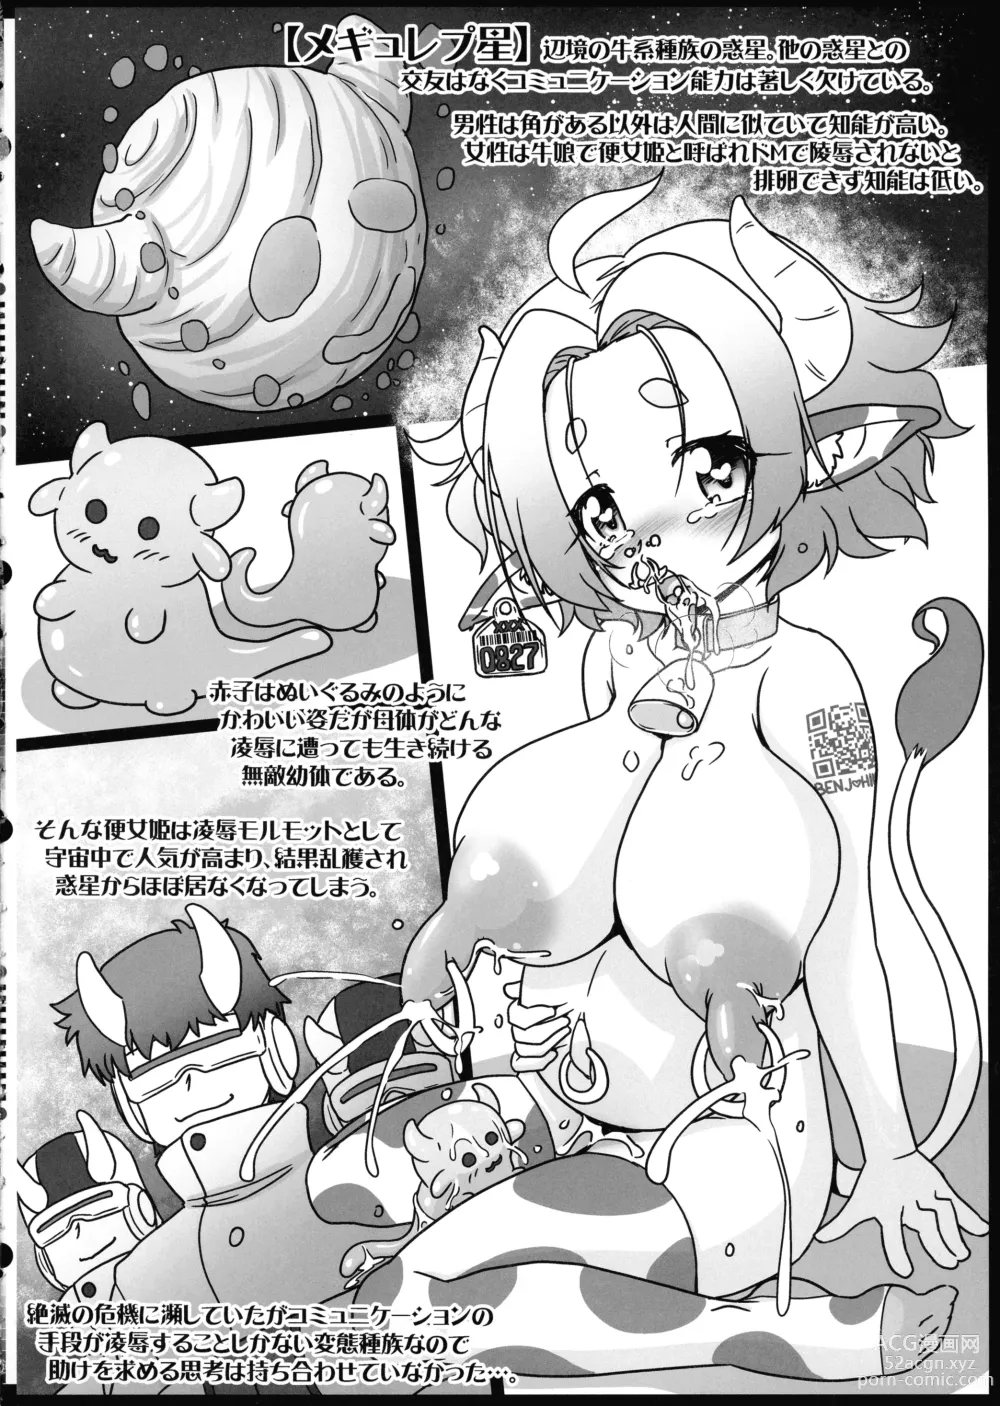 Page 6 of doujinshi Bokuchiku Zetchou Ushiko! Kotegawa Yui